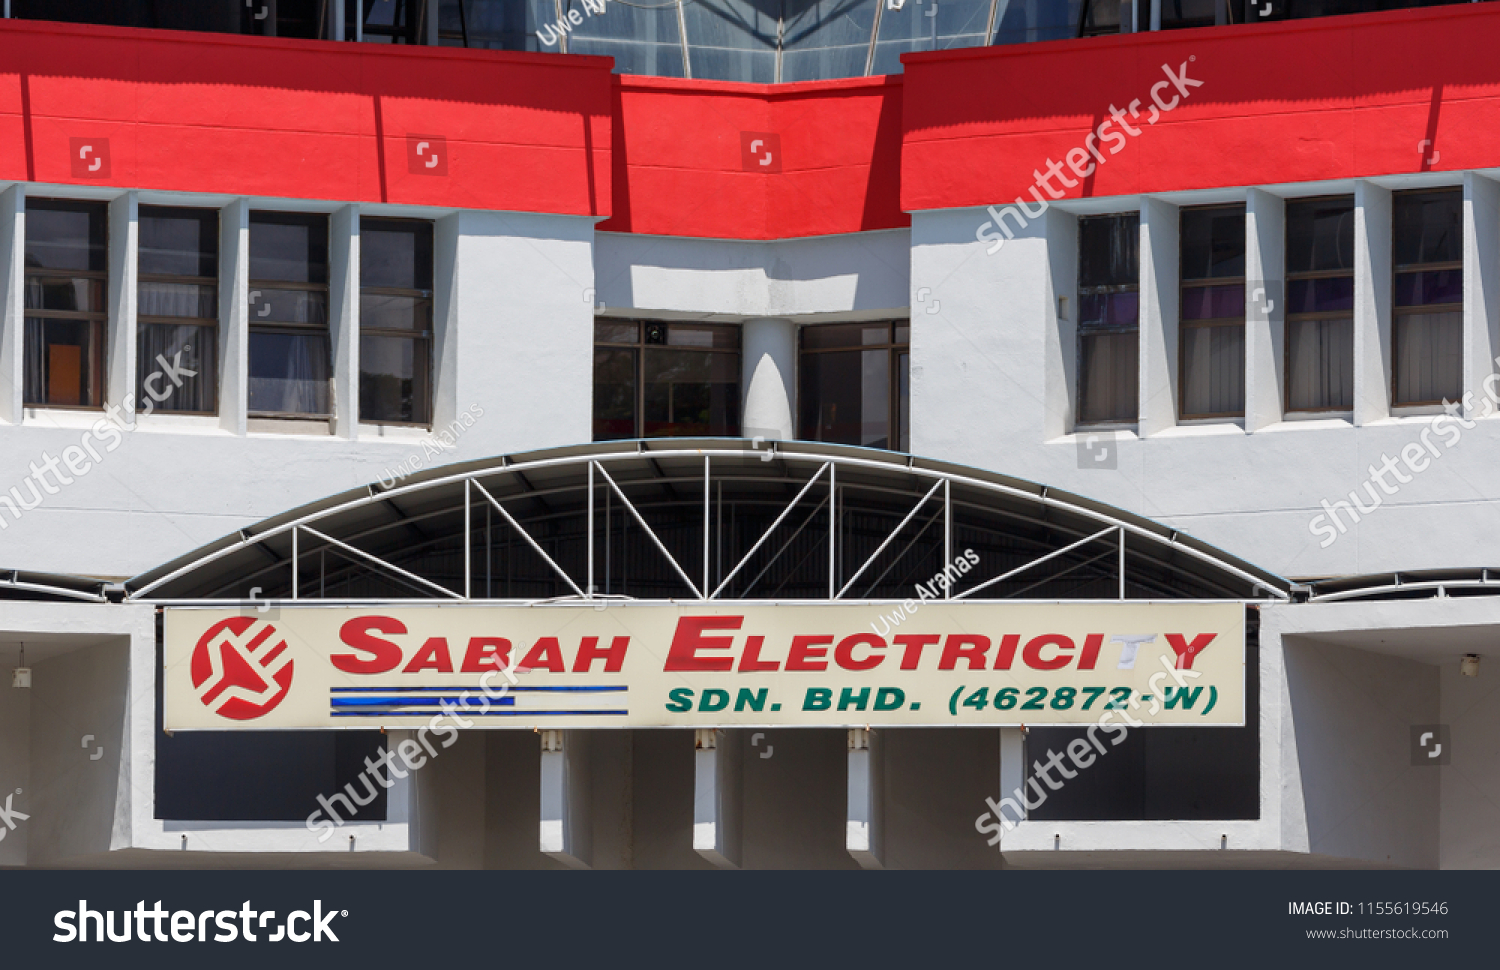 Sabah electricity sdn bhd